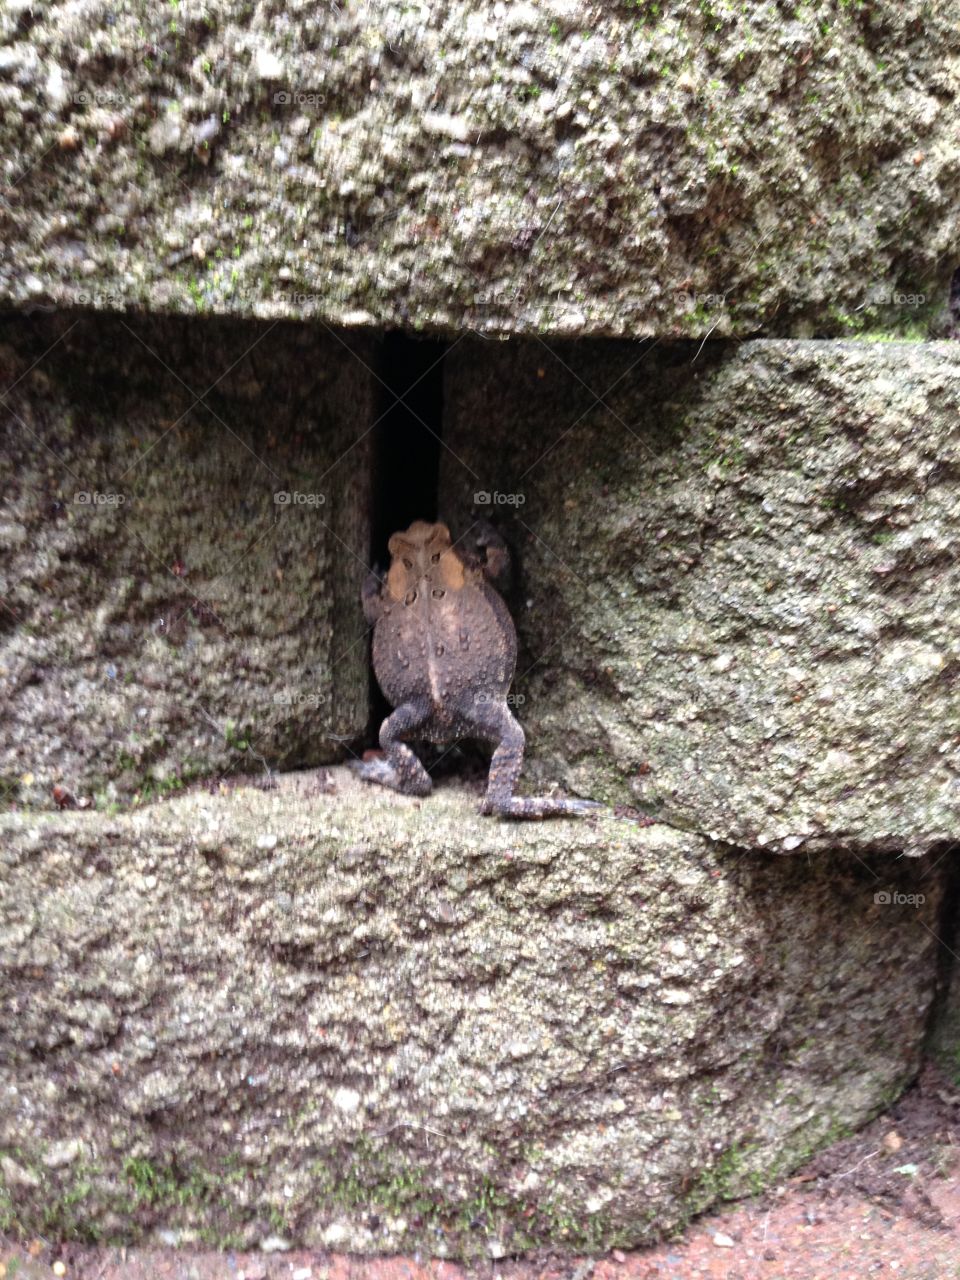 Frog "E". Climbing on our patio!